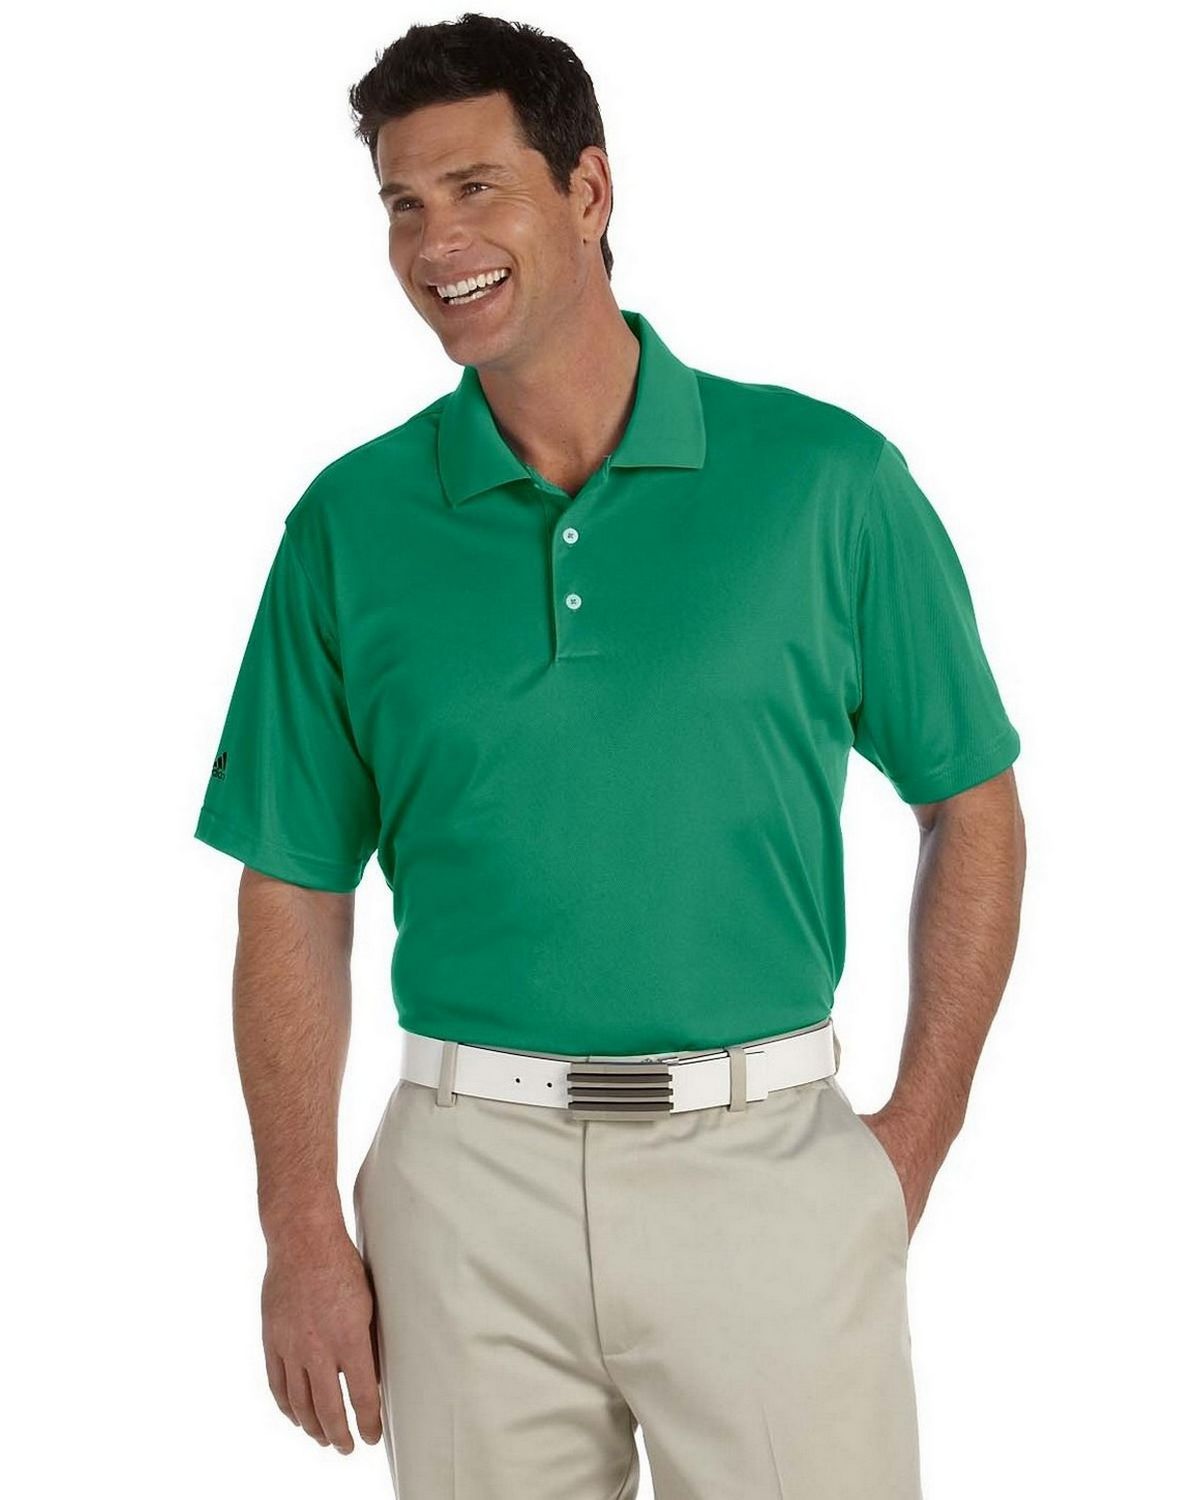 adidas climacool golf shirt review